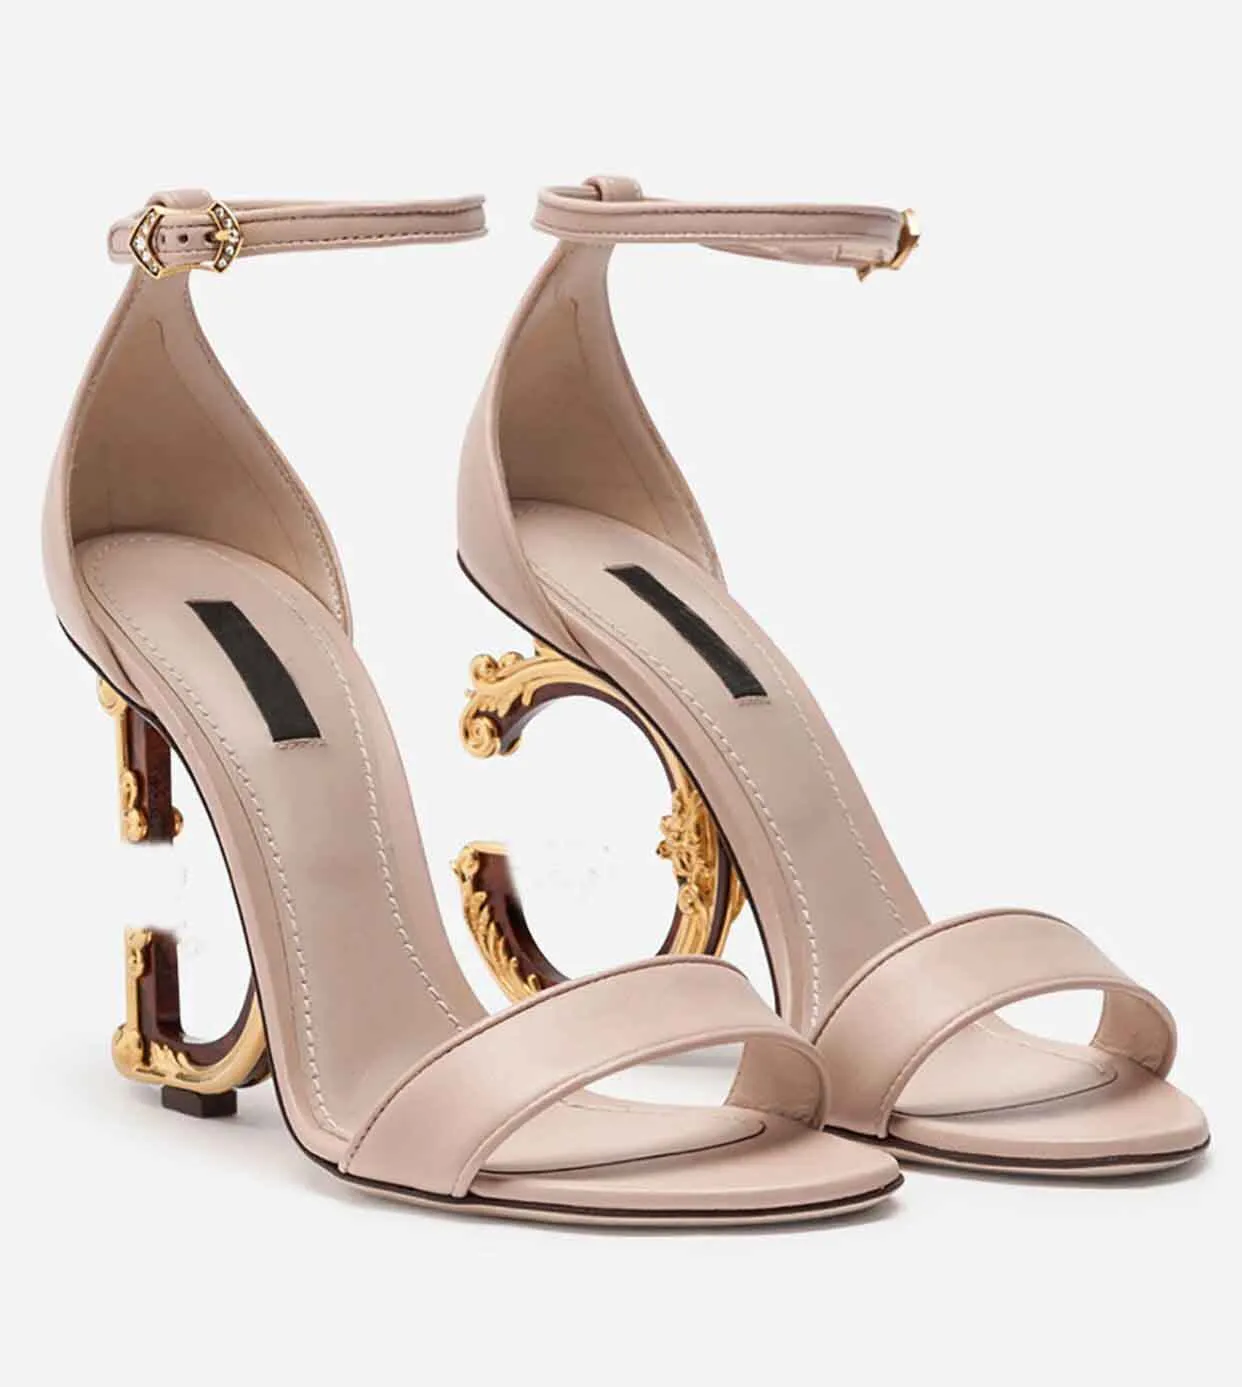 Summer Luxury Brands Keira Sandals Shoes Bridal Wedding Dress Pumps Polished Calfkin High Heels Lady Gladiator Sandalias With Box.EU35-43